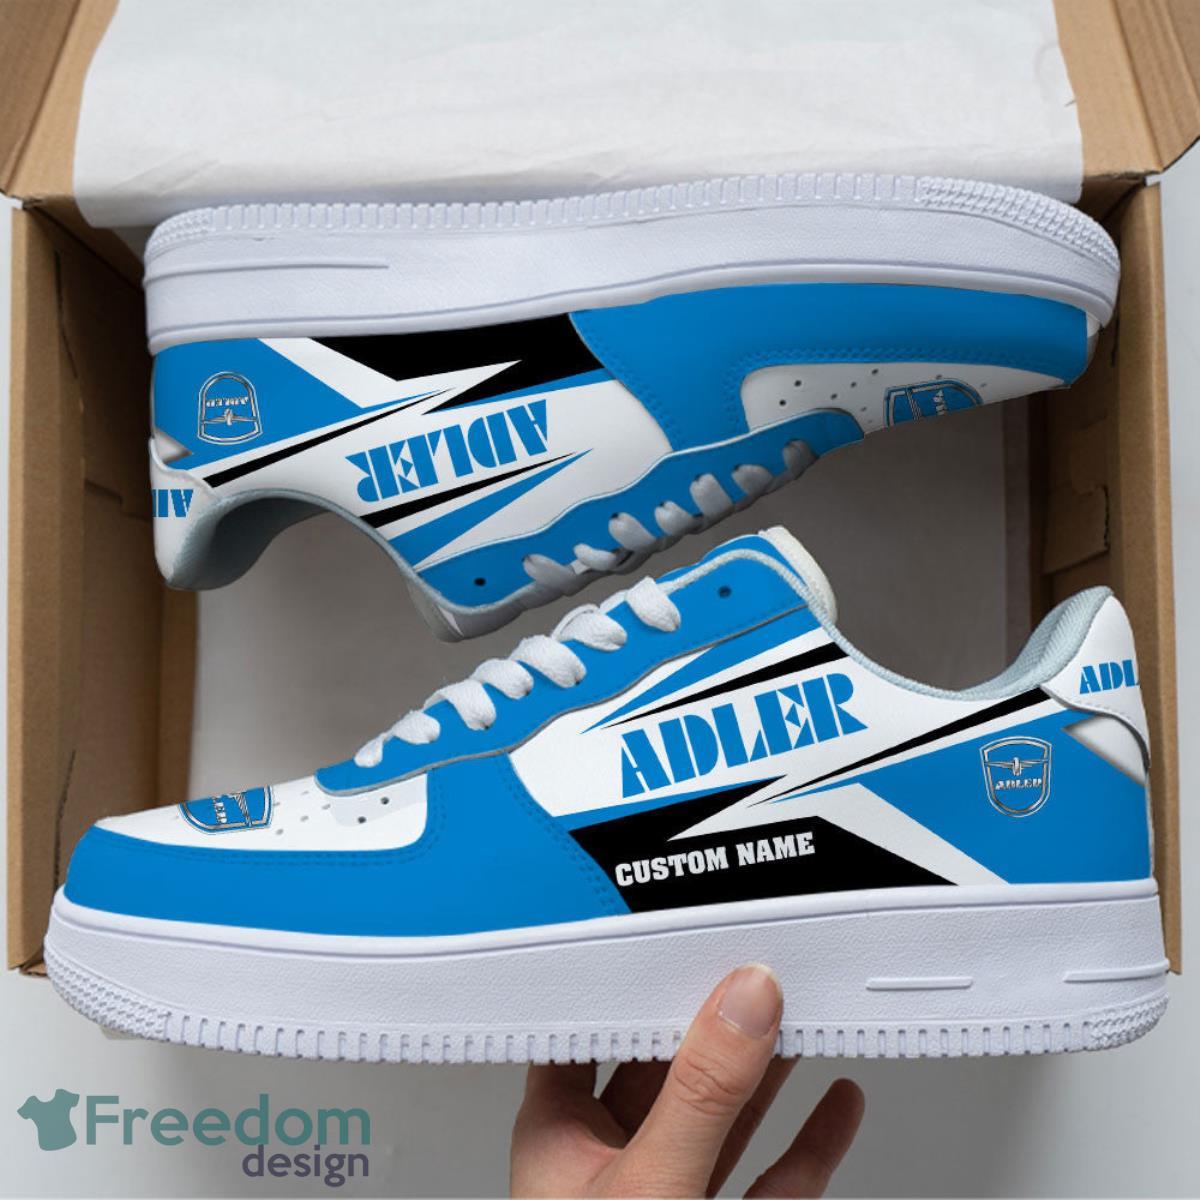 Adler Custom Name Air Force Shoes Sport Sneakers For Men Women Product Photo 1